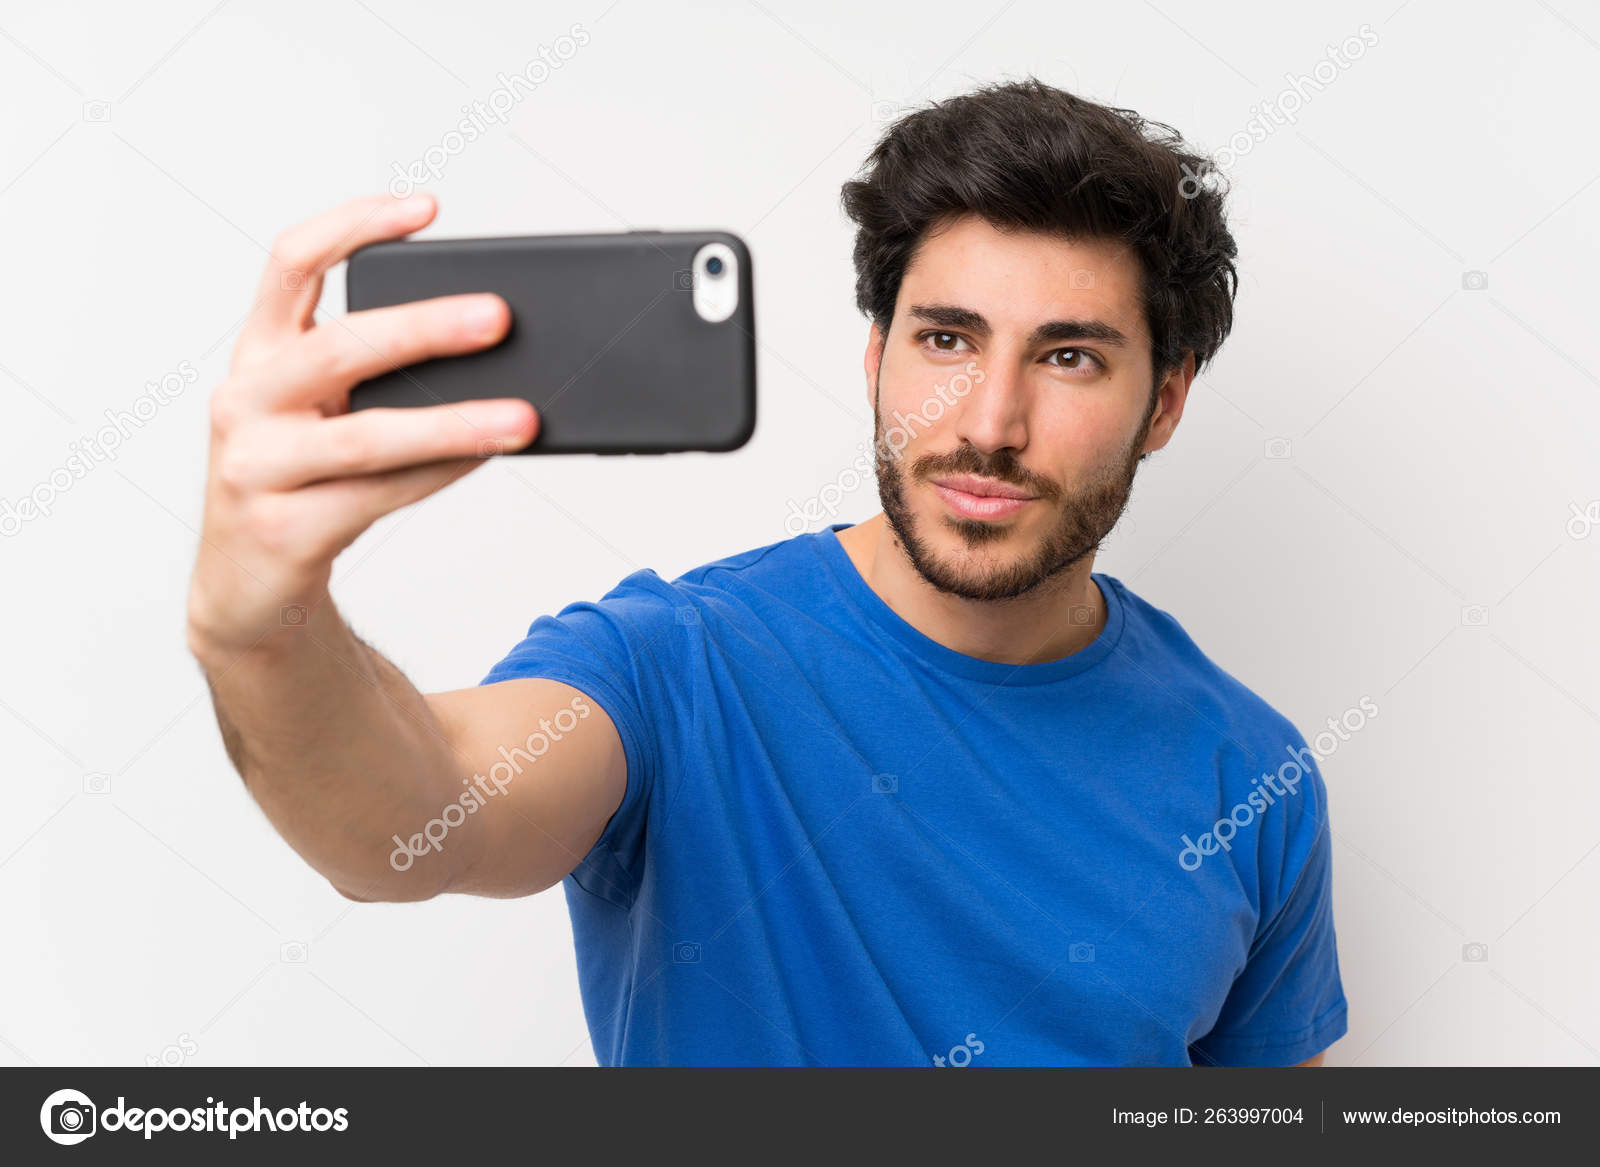 depositphotos_263997004-stock-photo-handsome-man-making-selfie-cellphone.jpg